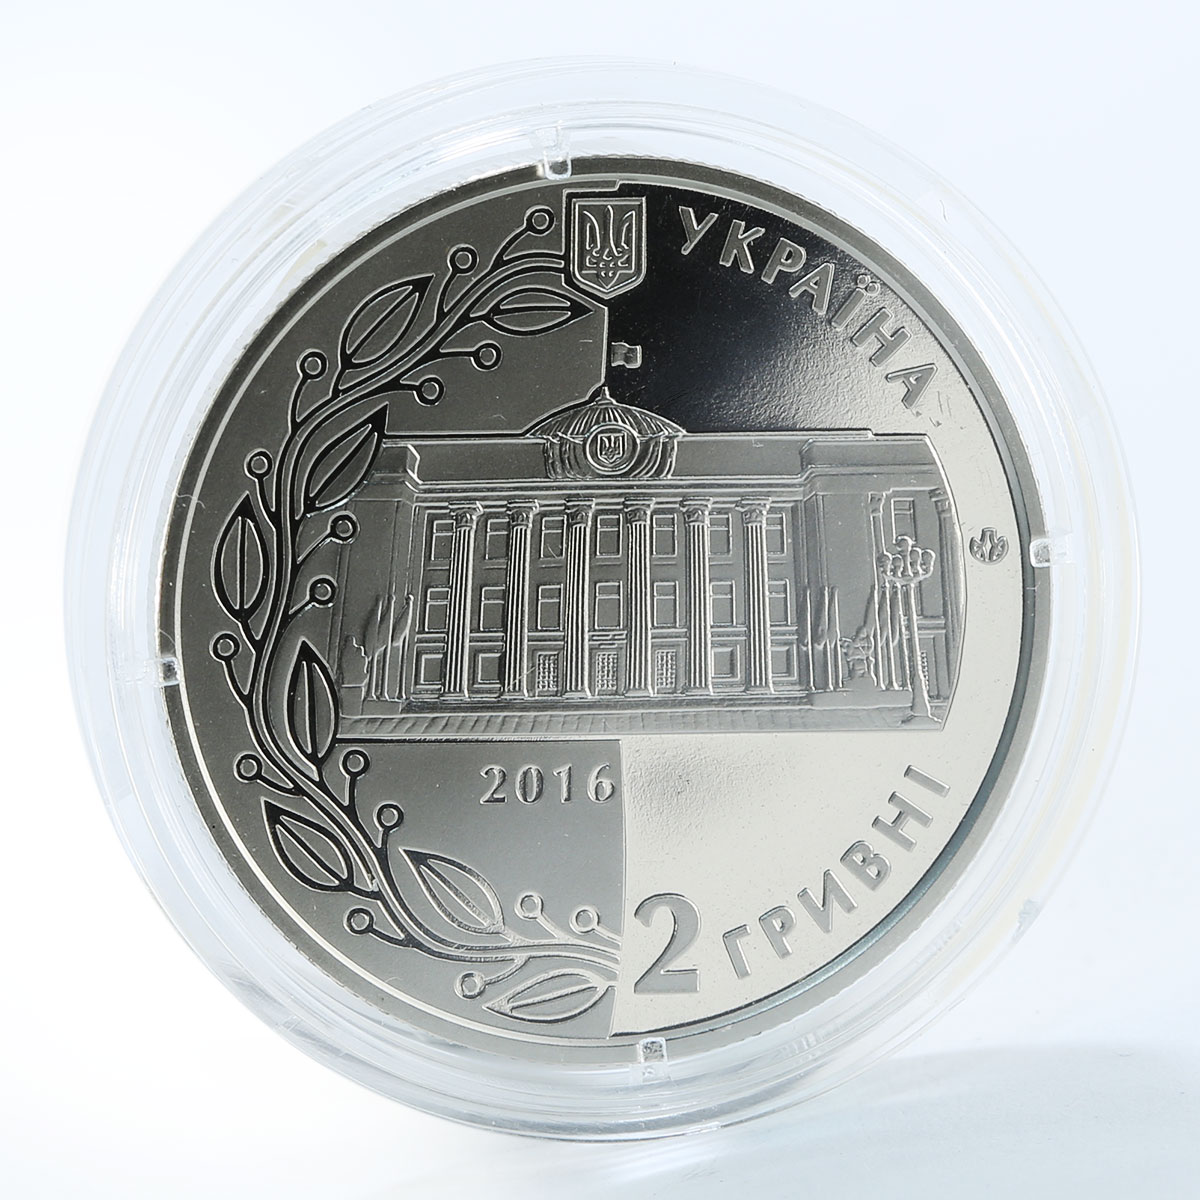 Ukraine 2 hryvnia 20 years of Ukrainian Constitution state law nickel coin 2016